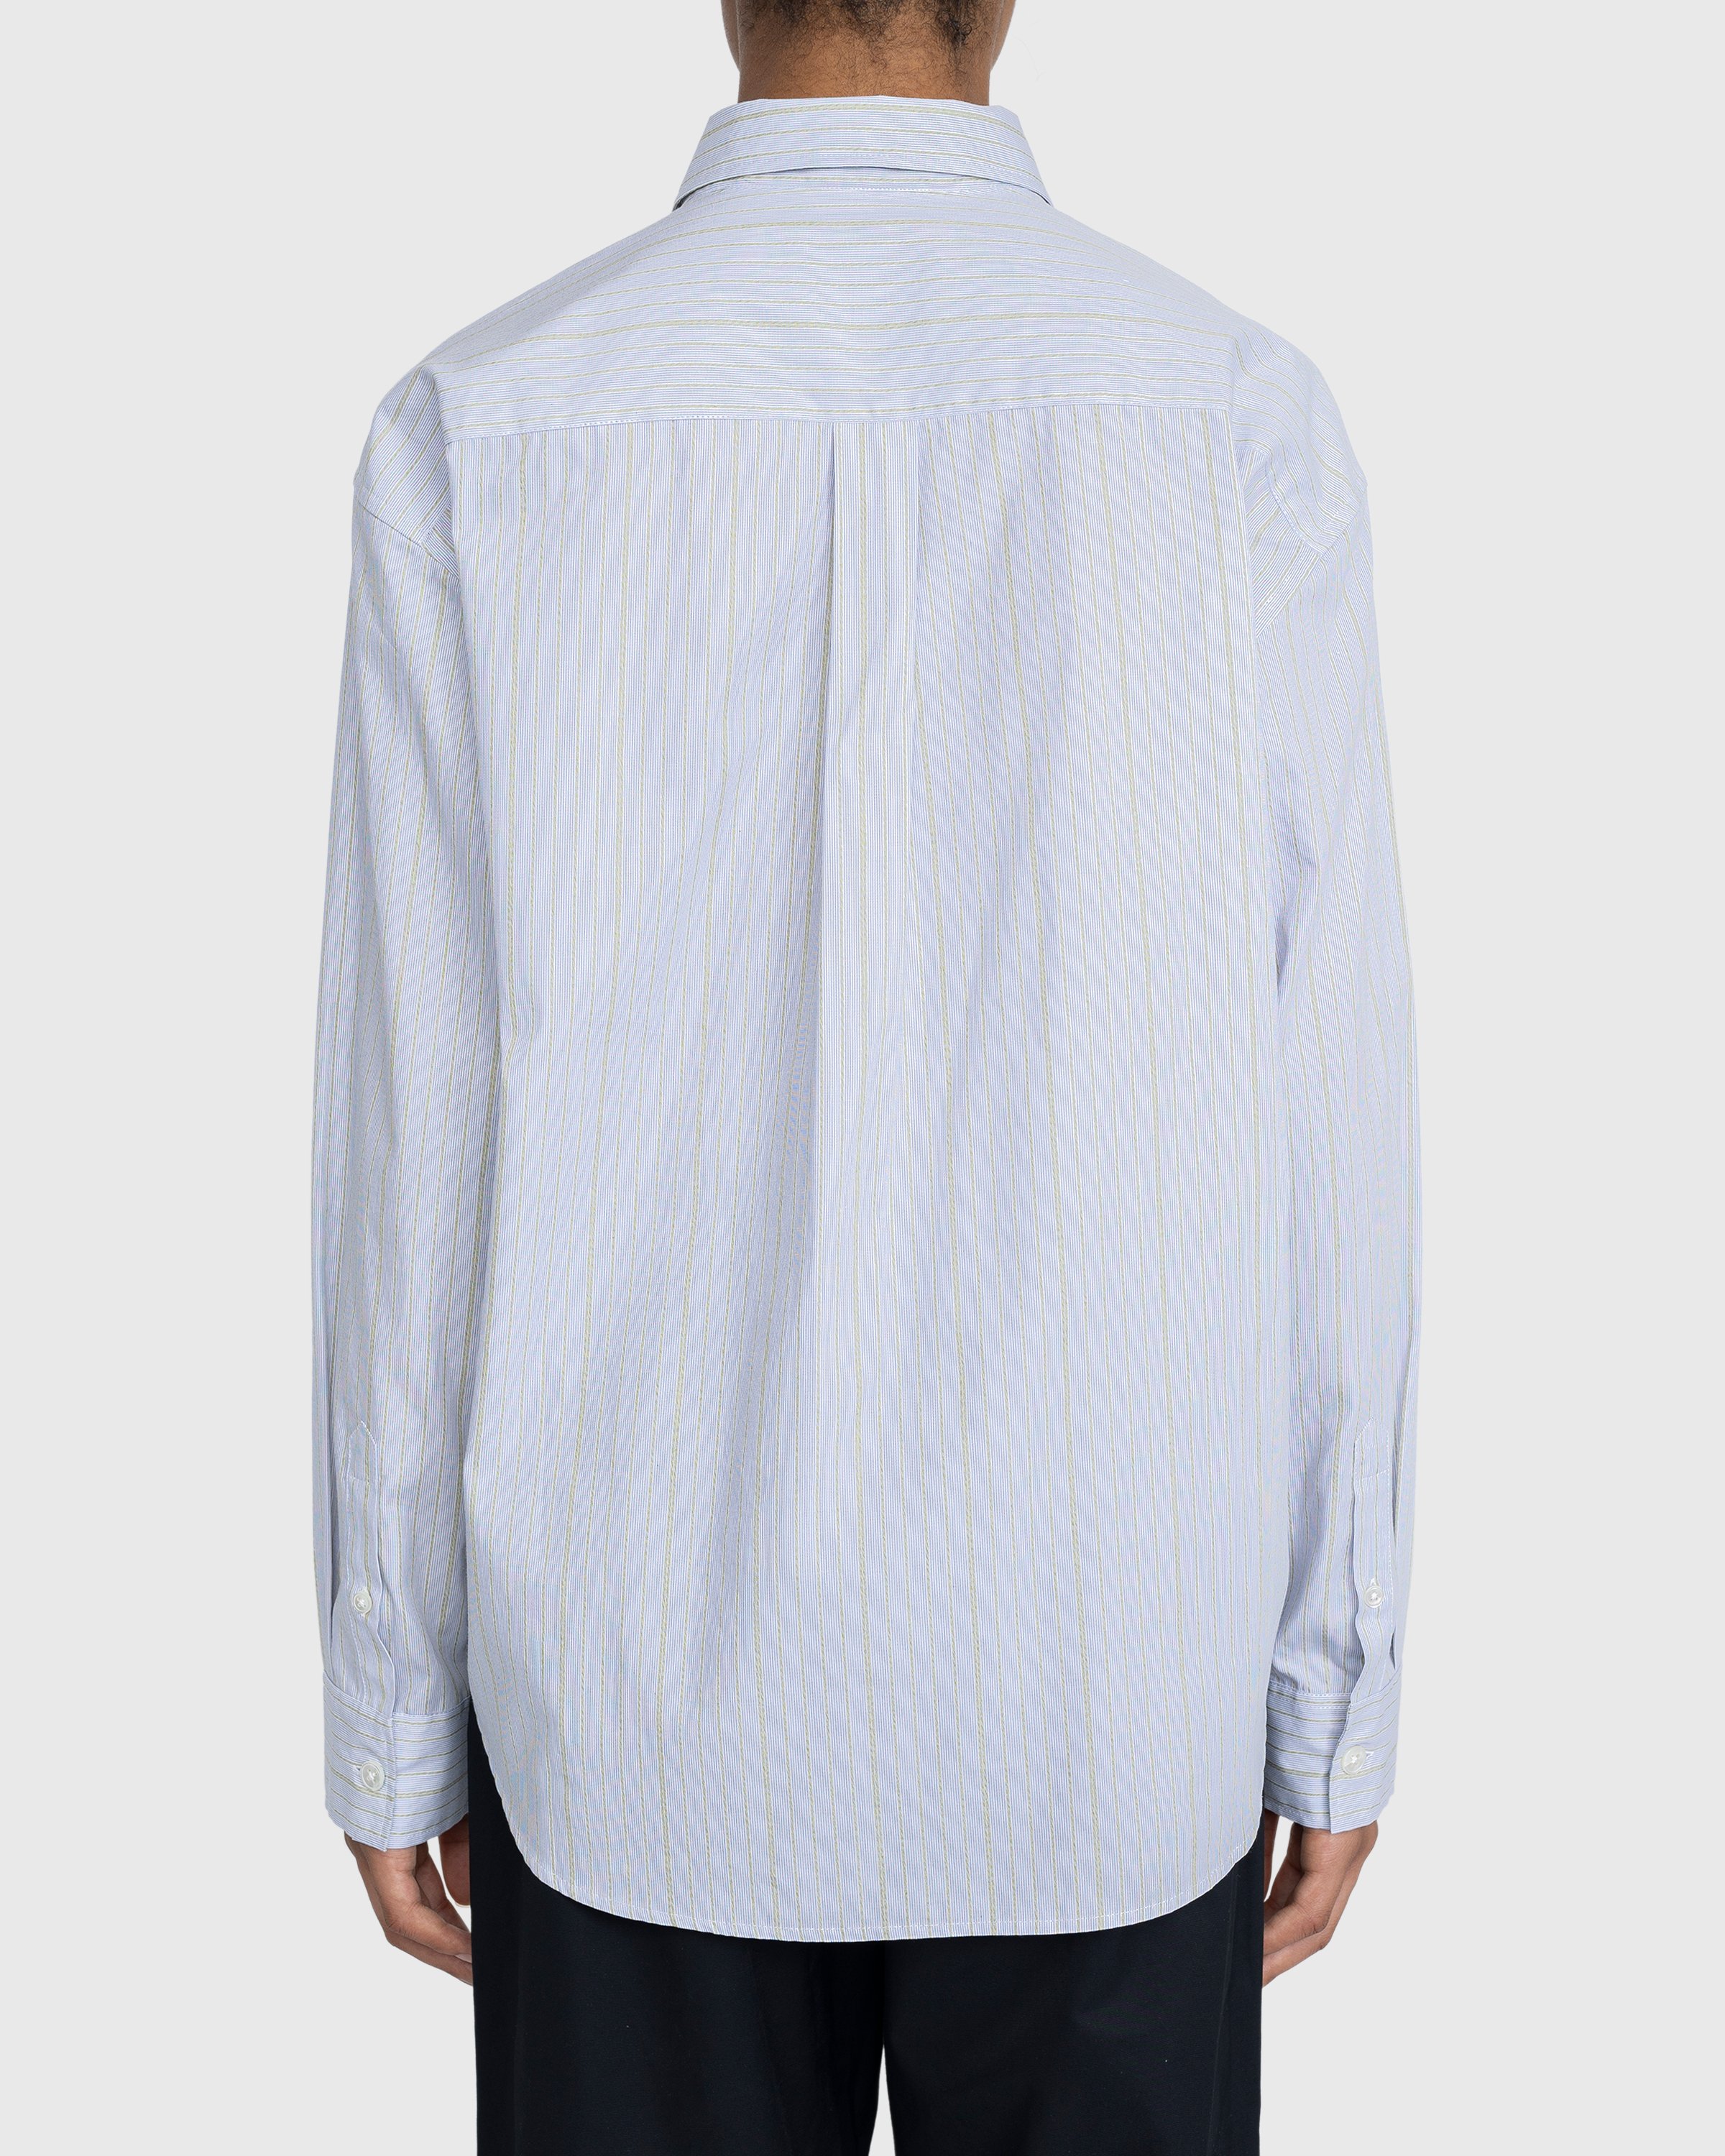 Highsnobiety - Striped Dress Shirt White/Blue - Clothing - Blue - Image 3